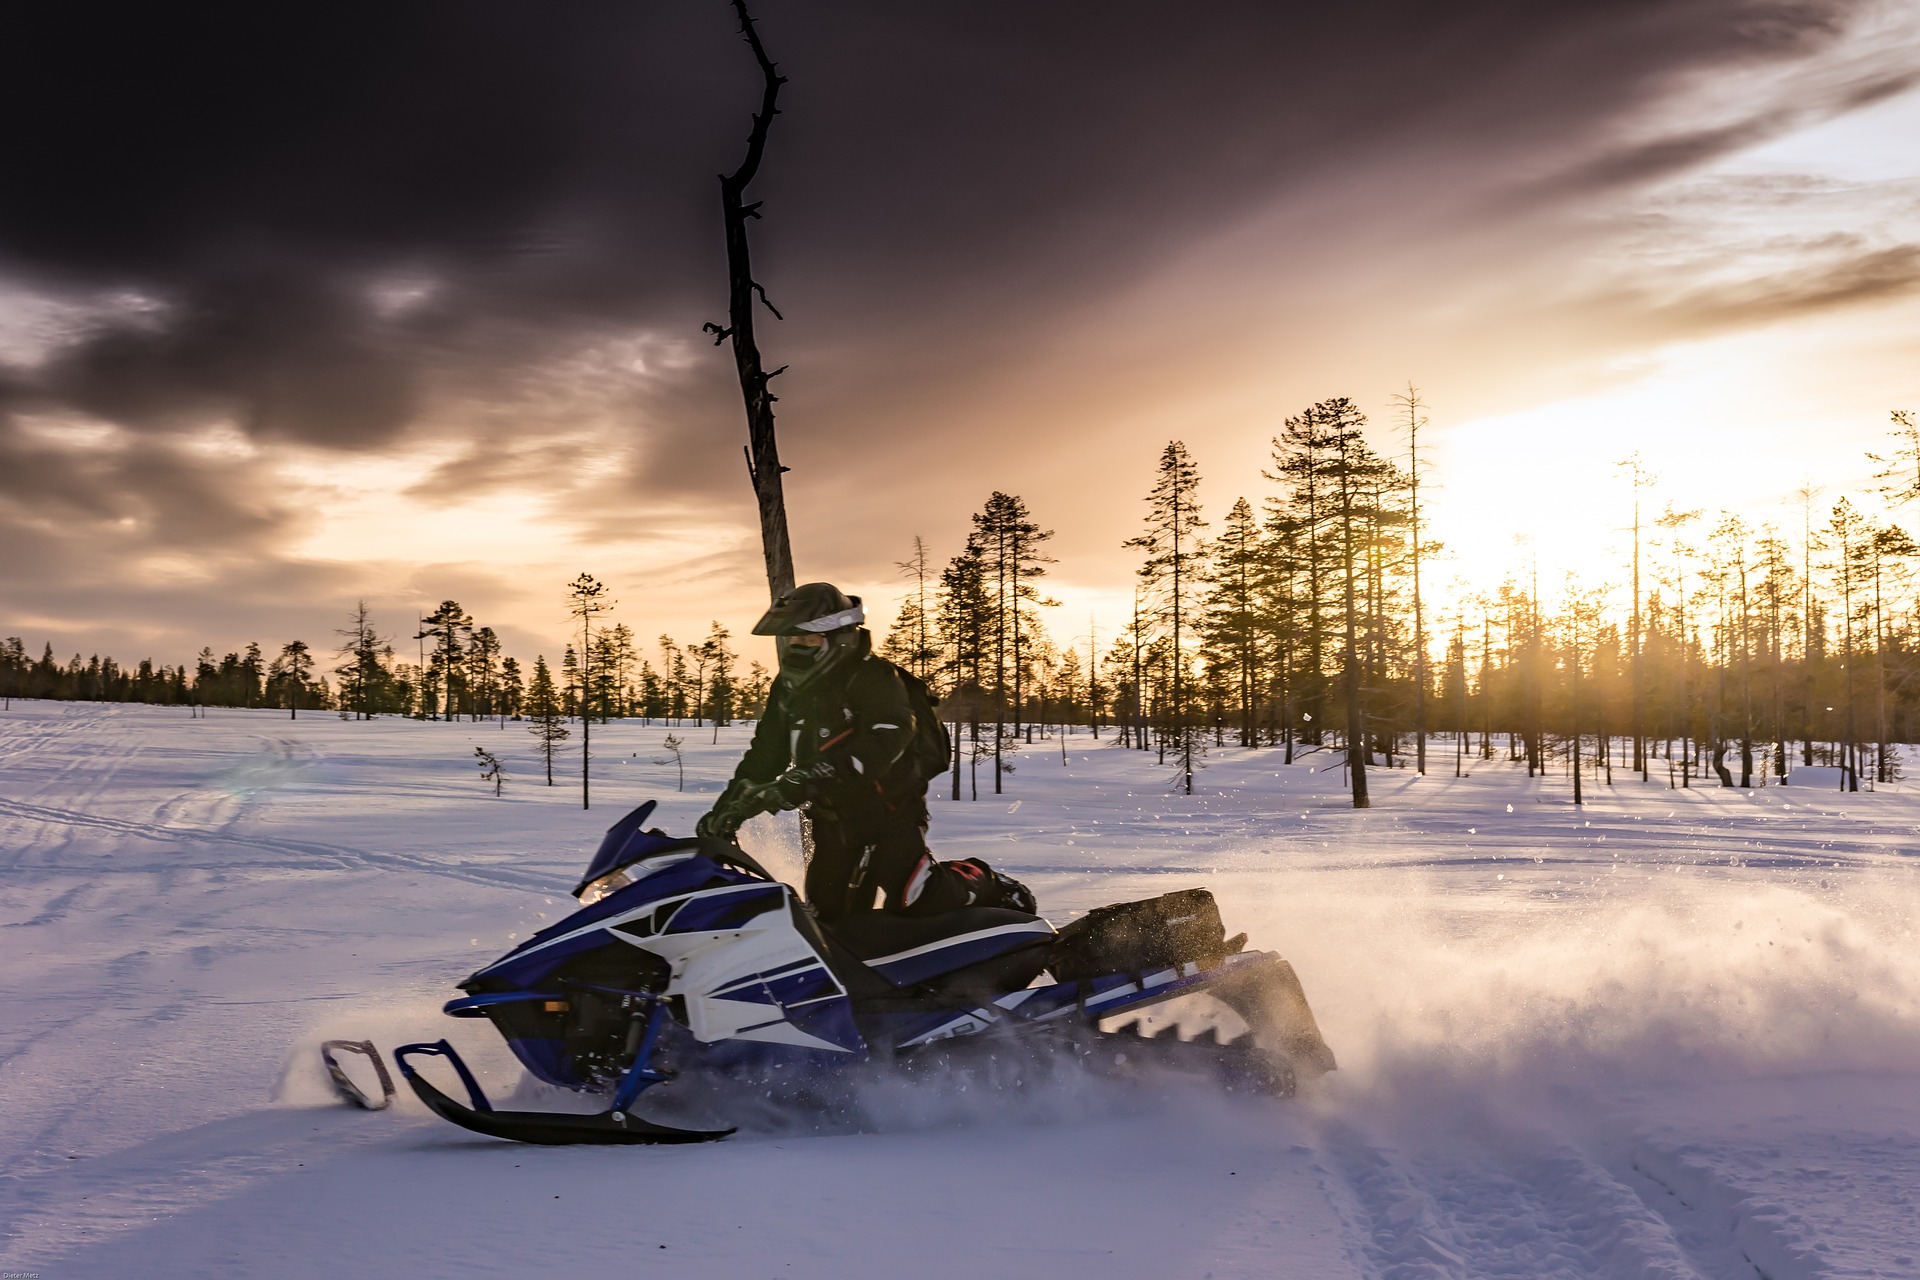 ATV and Snowmobile For Powersport Fun This Winter Season